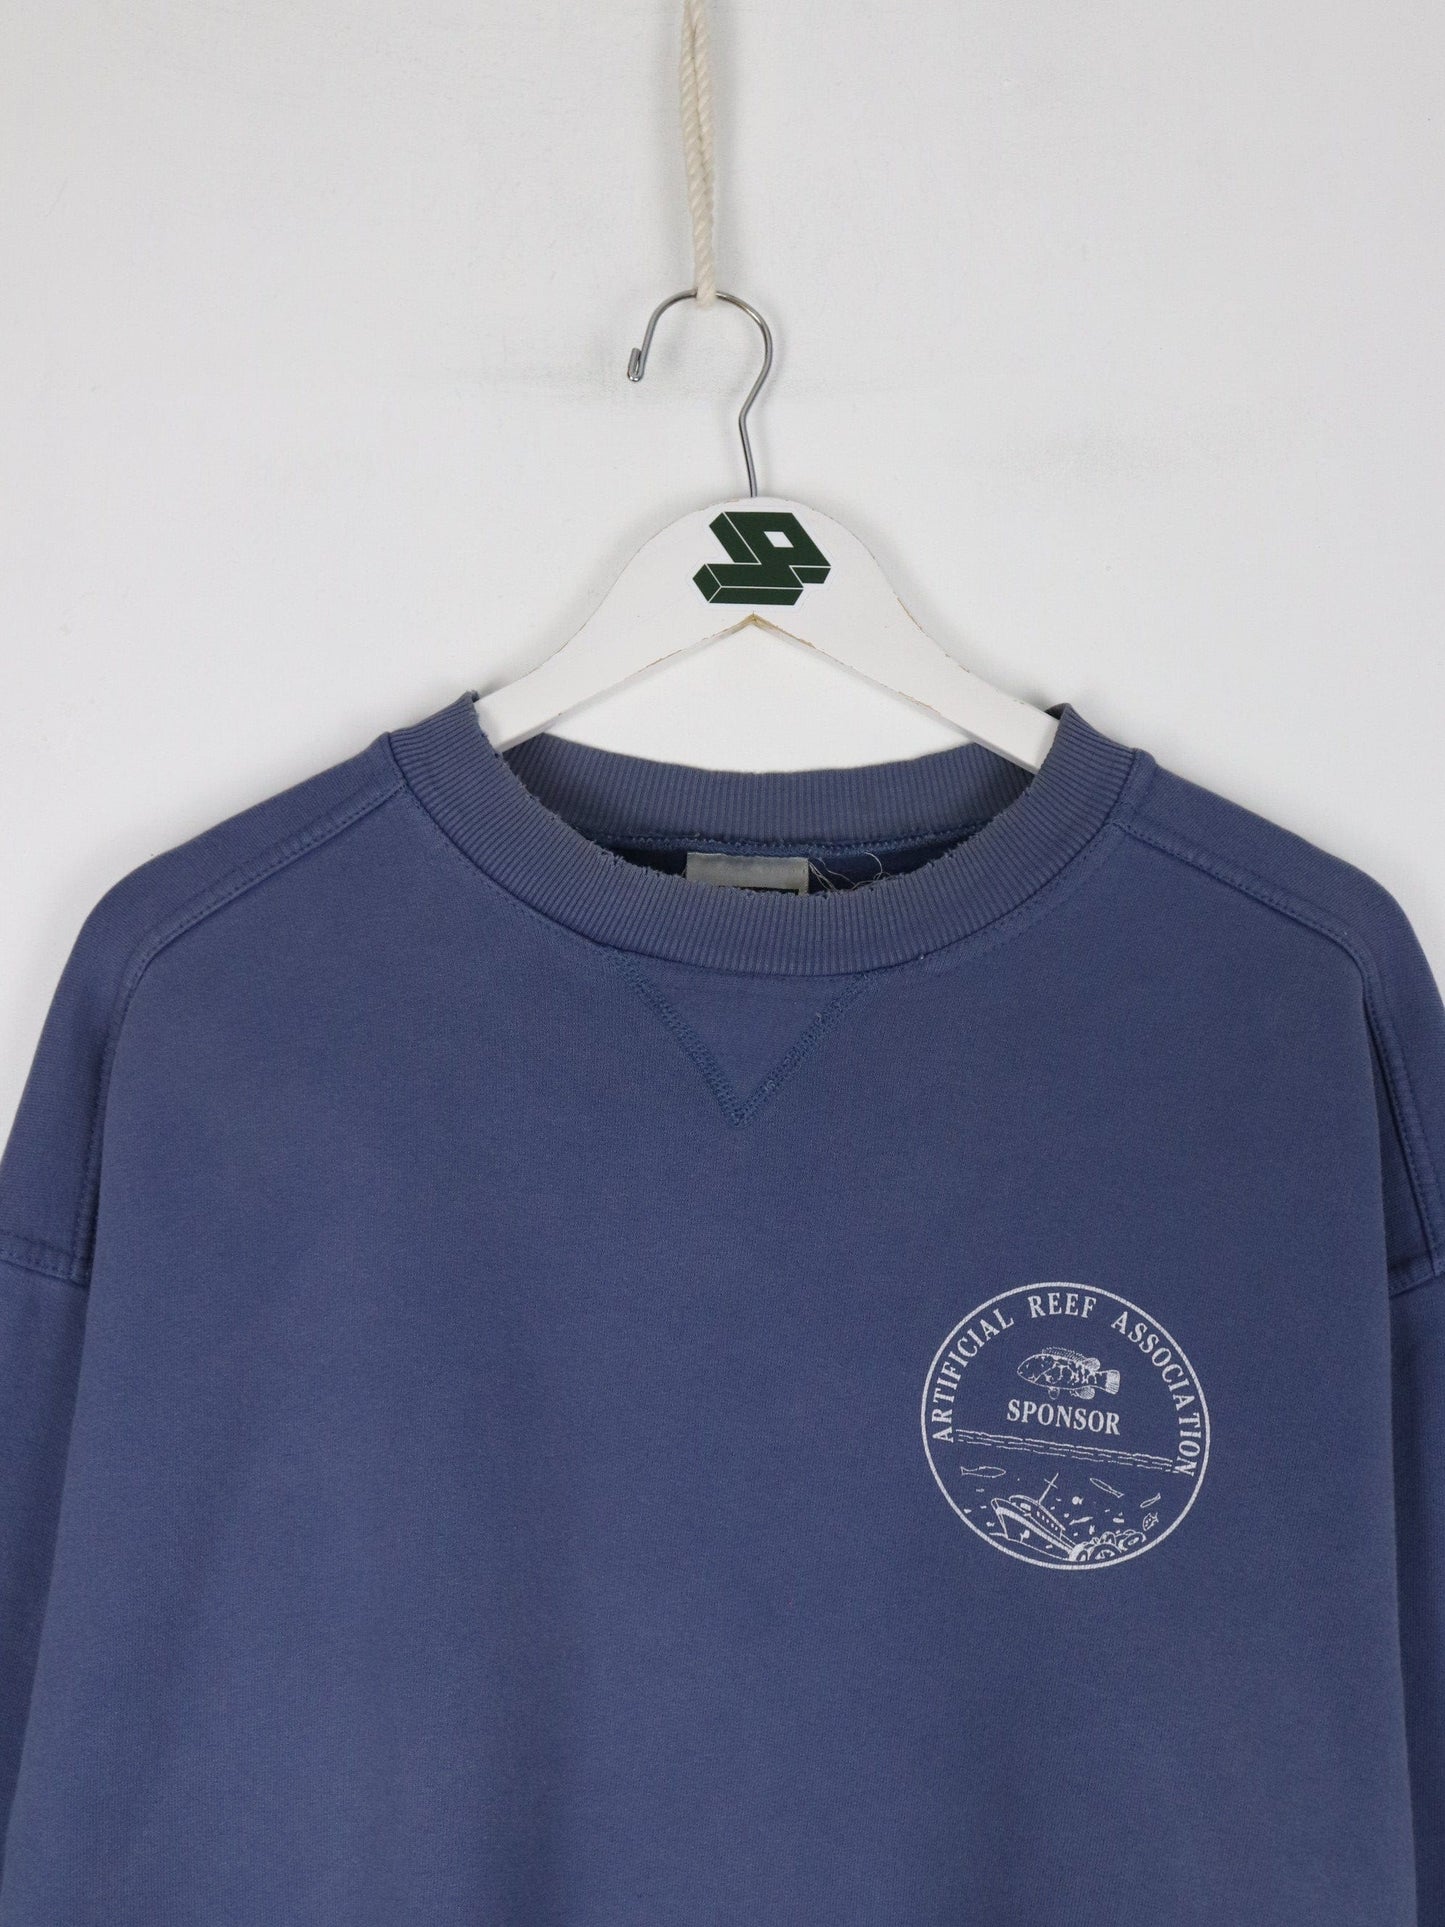 Other Sweatshirts & Hoodies Vintage Artificial Reef Association Sweatshirt Mens XL Blue 90s Nature